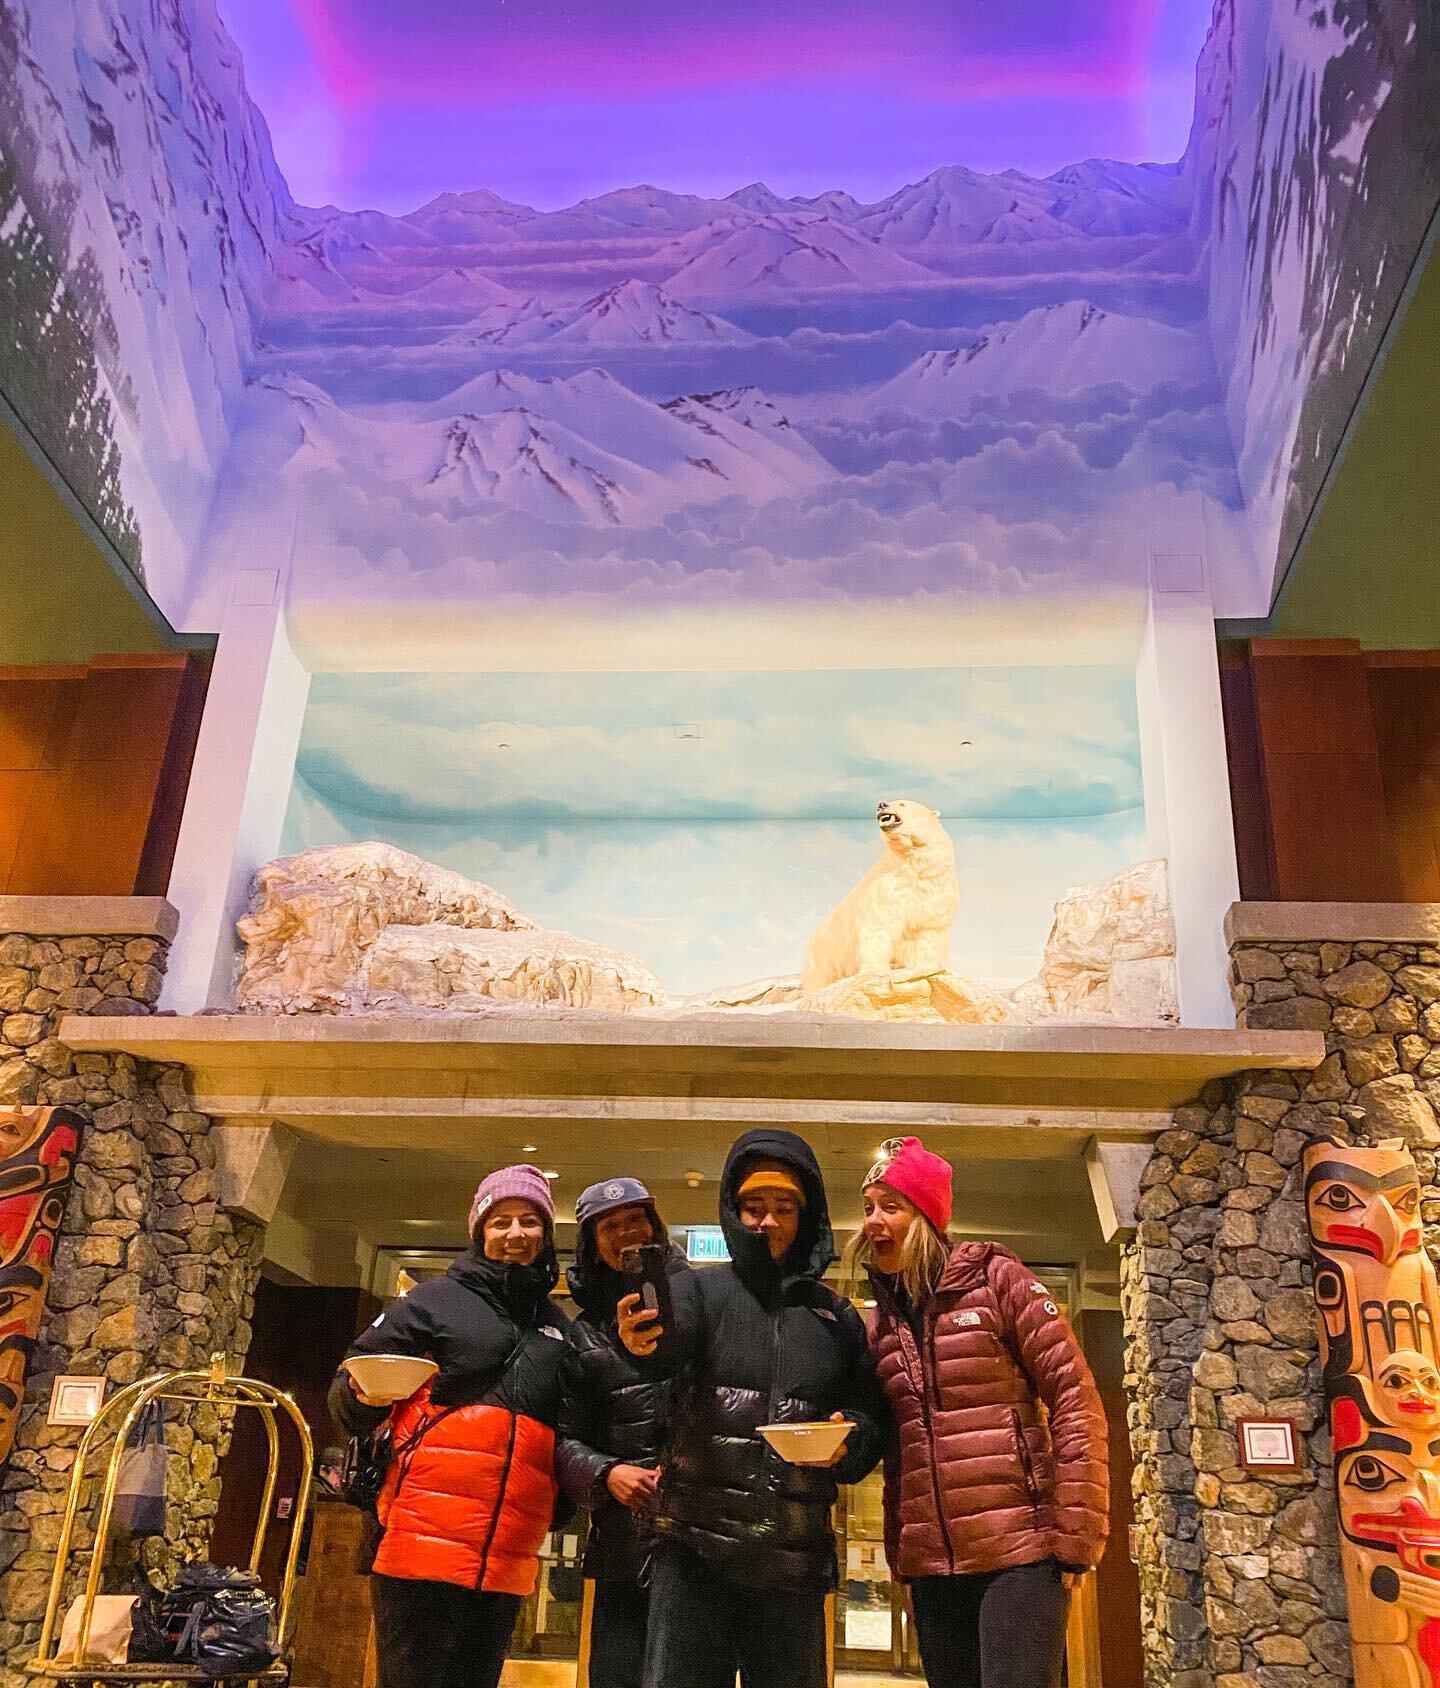 Leftover ramen and polar bears @resortalyeska with the crew @badgal_brooky @leannepelosi @curlsinthewild @ingridbackstrom @keenanjeff 📸 @annethene